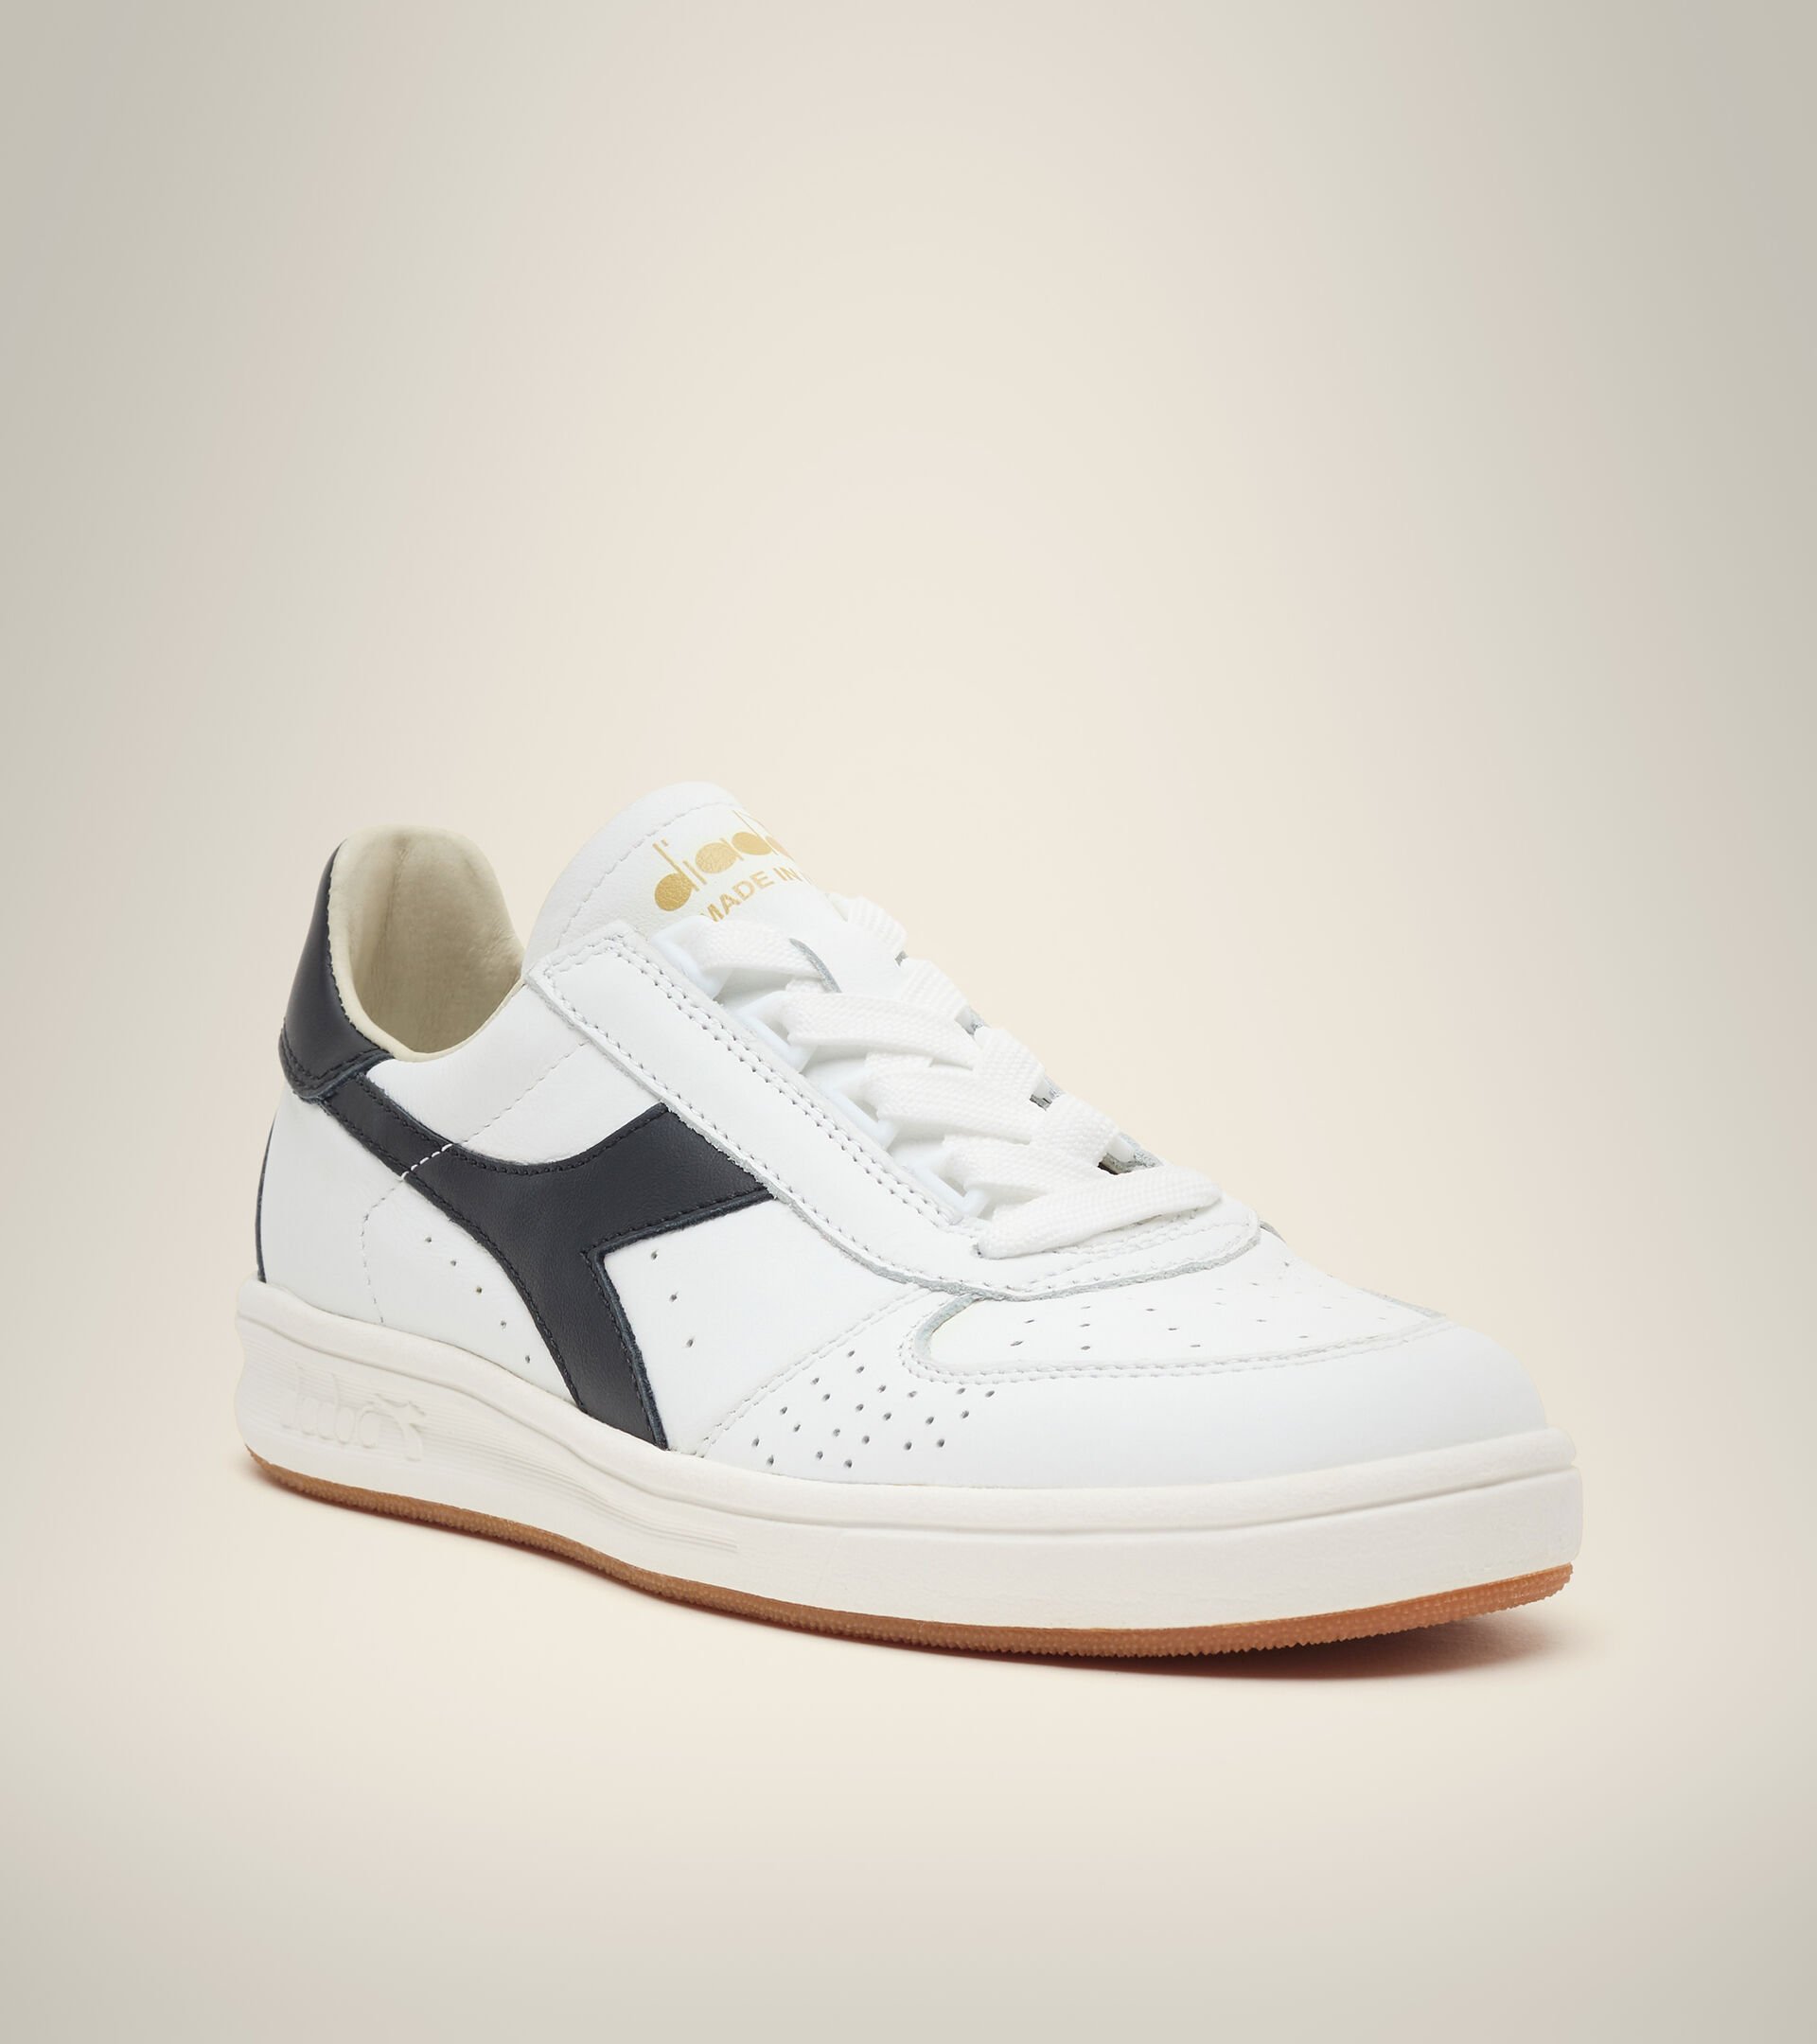 Made in Italy Heritage shoe - Unisex B.ELITE H ITALIA SPORT WHITE/BLACK/GOLD - Diadora